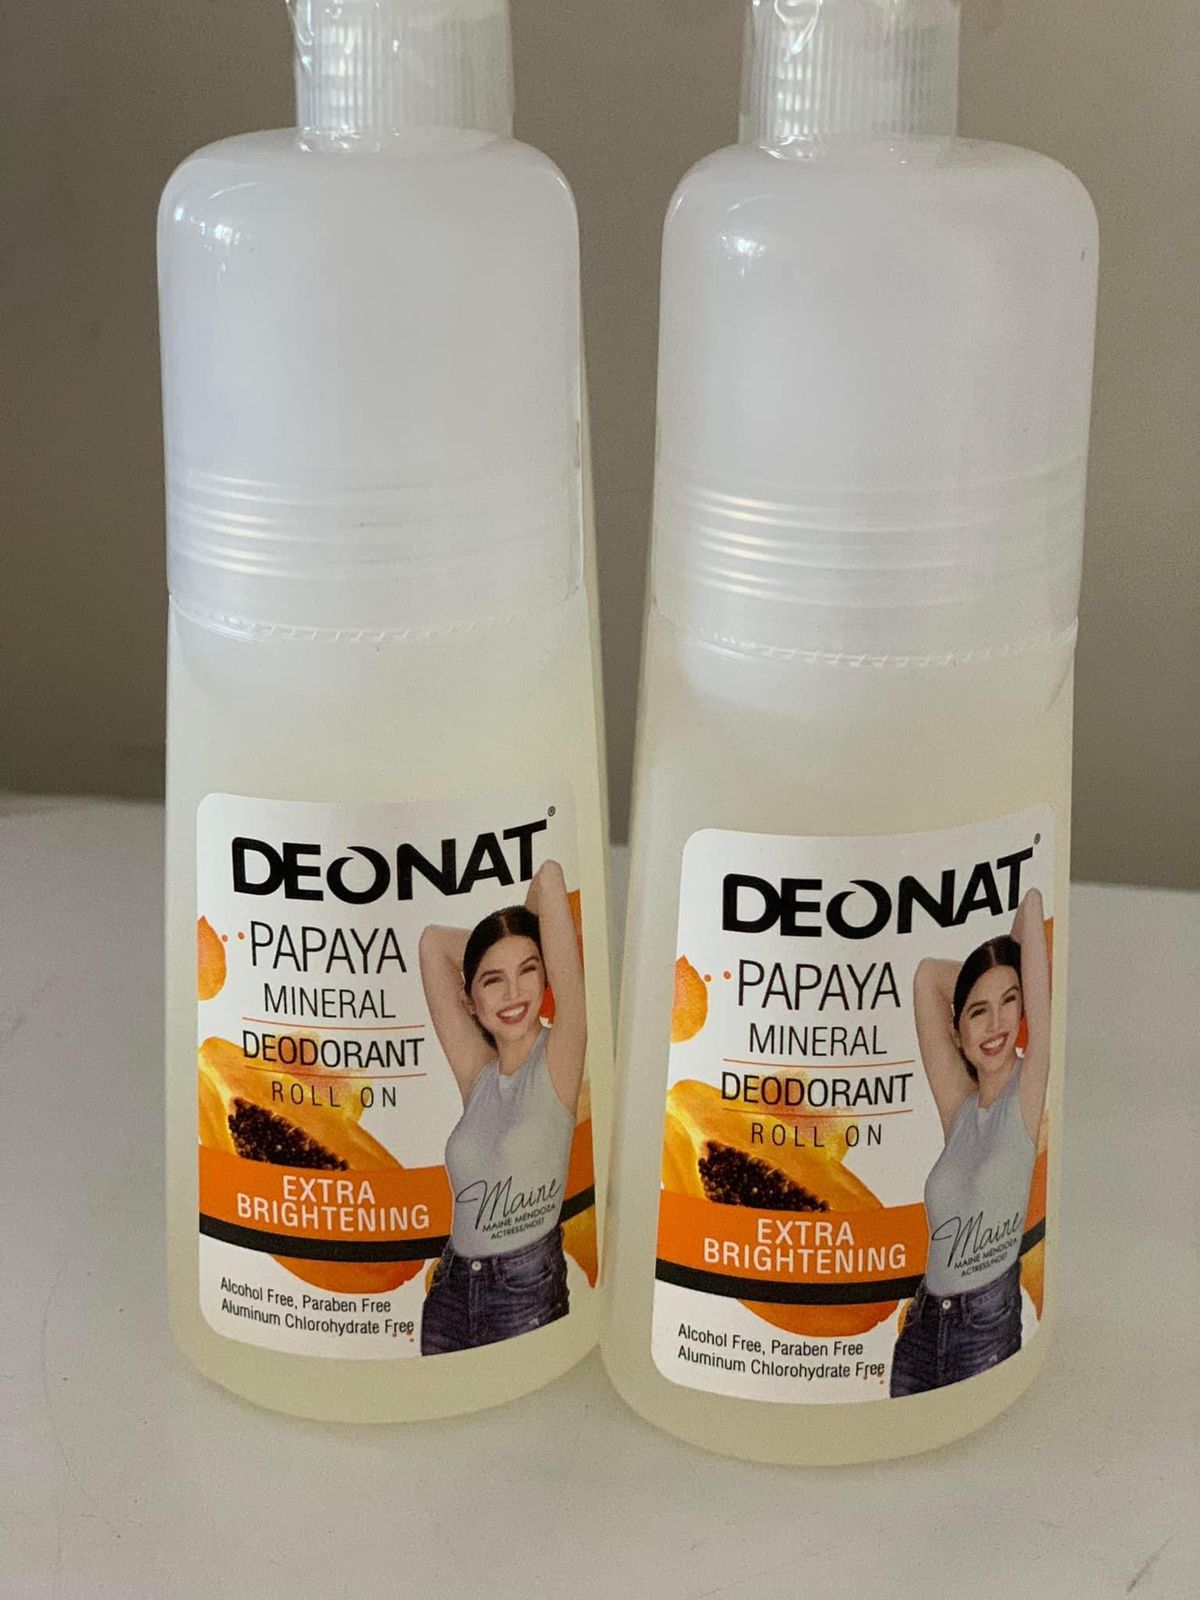 Deonat Papaya Mineral Deodorant Roll-On